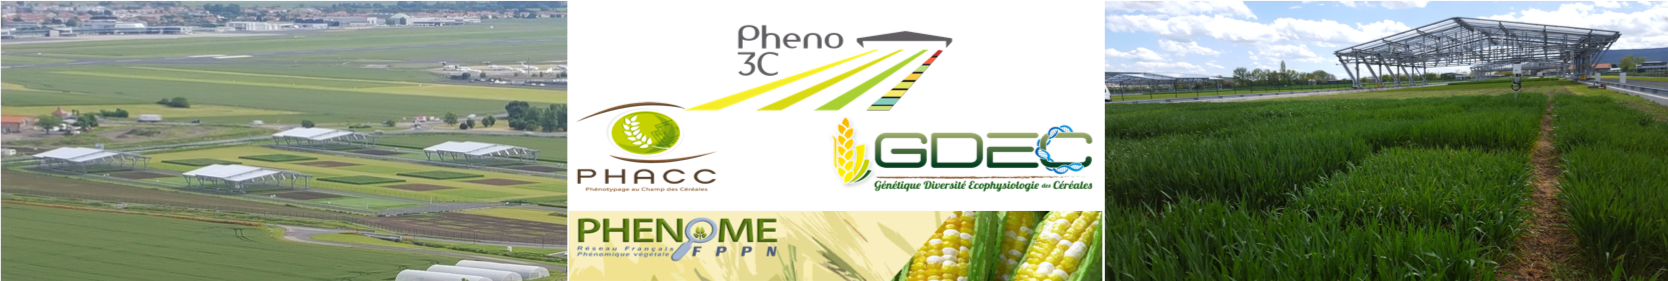 Welcome to the Pheno3C phenotyping platform website